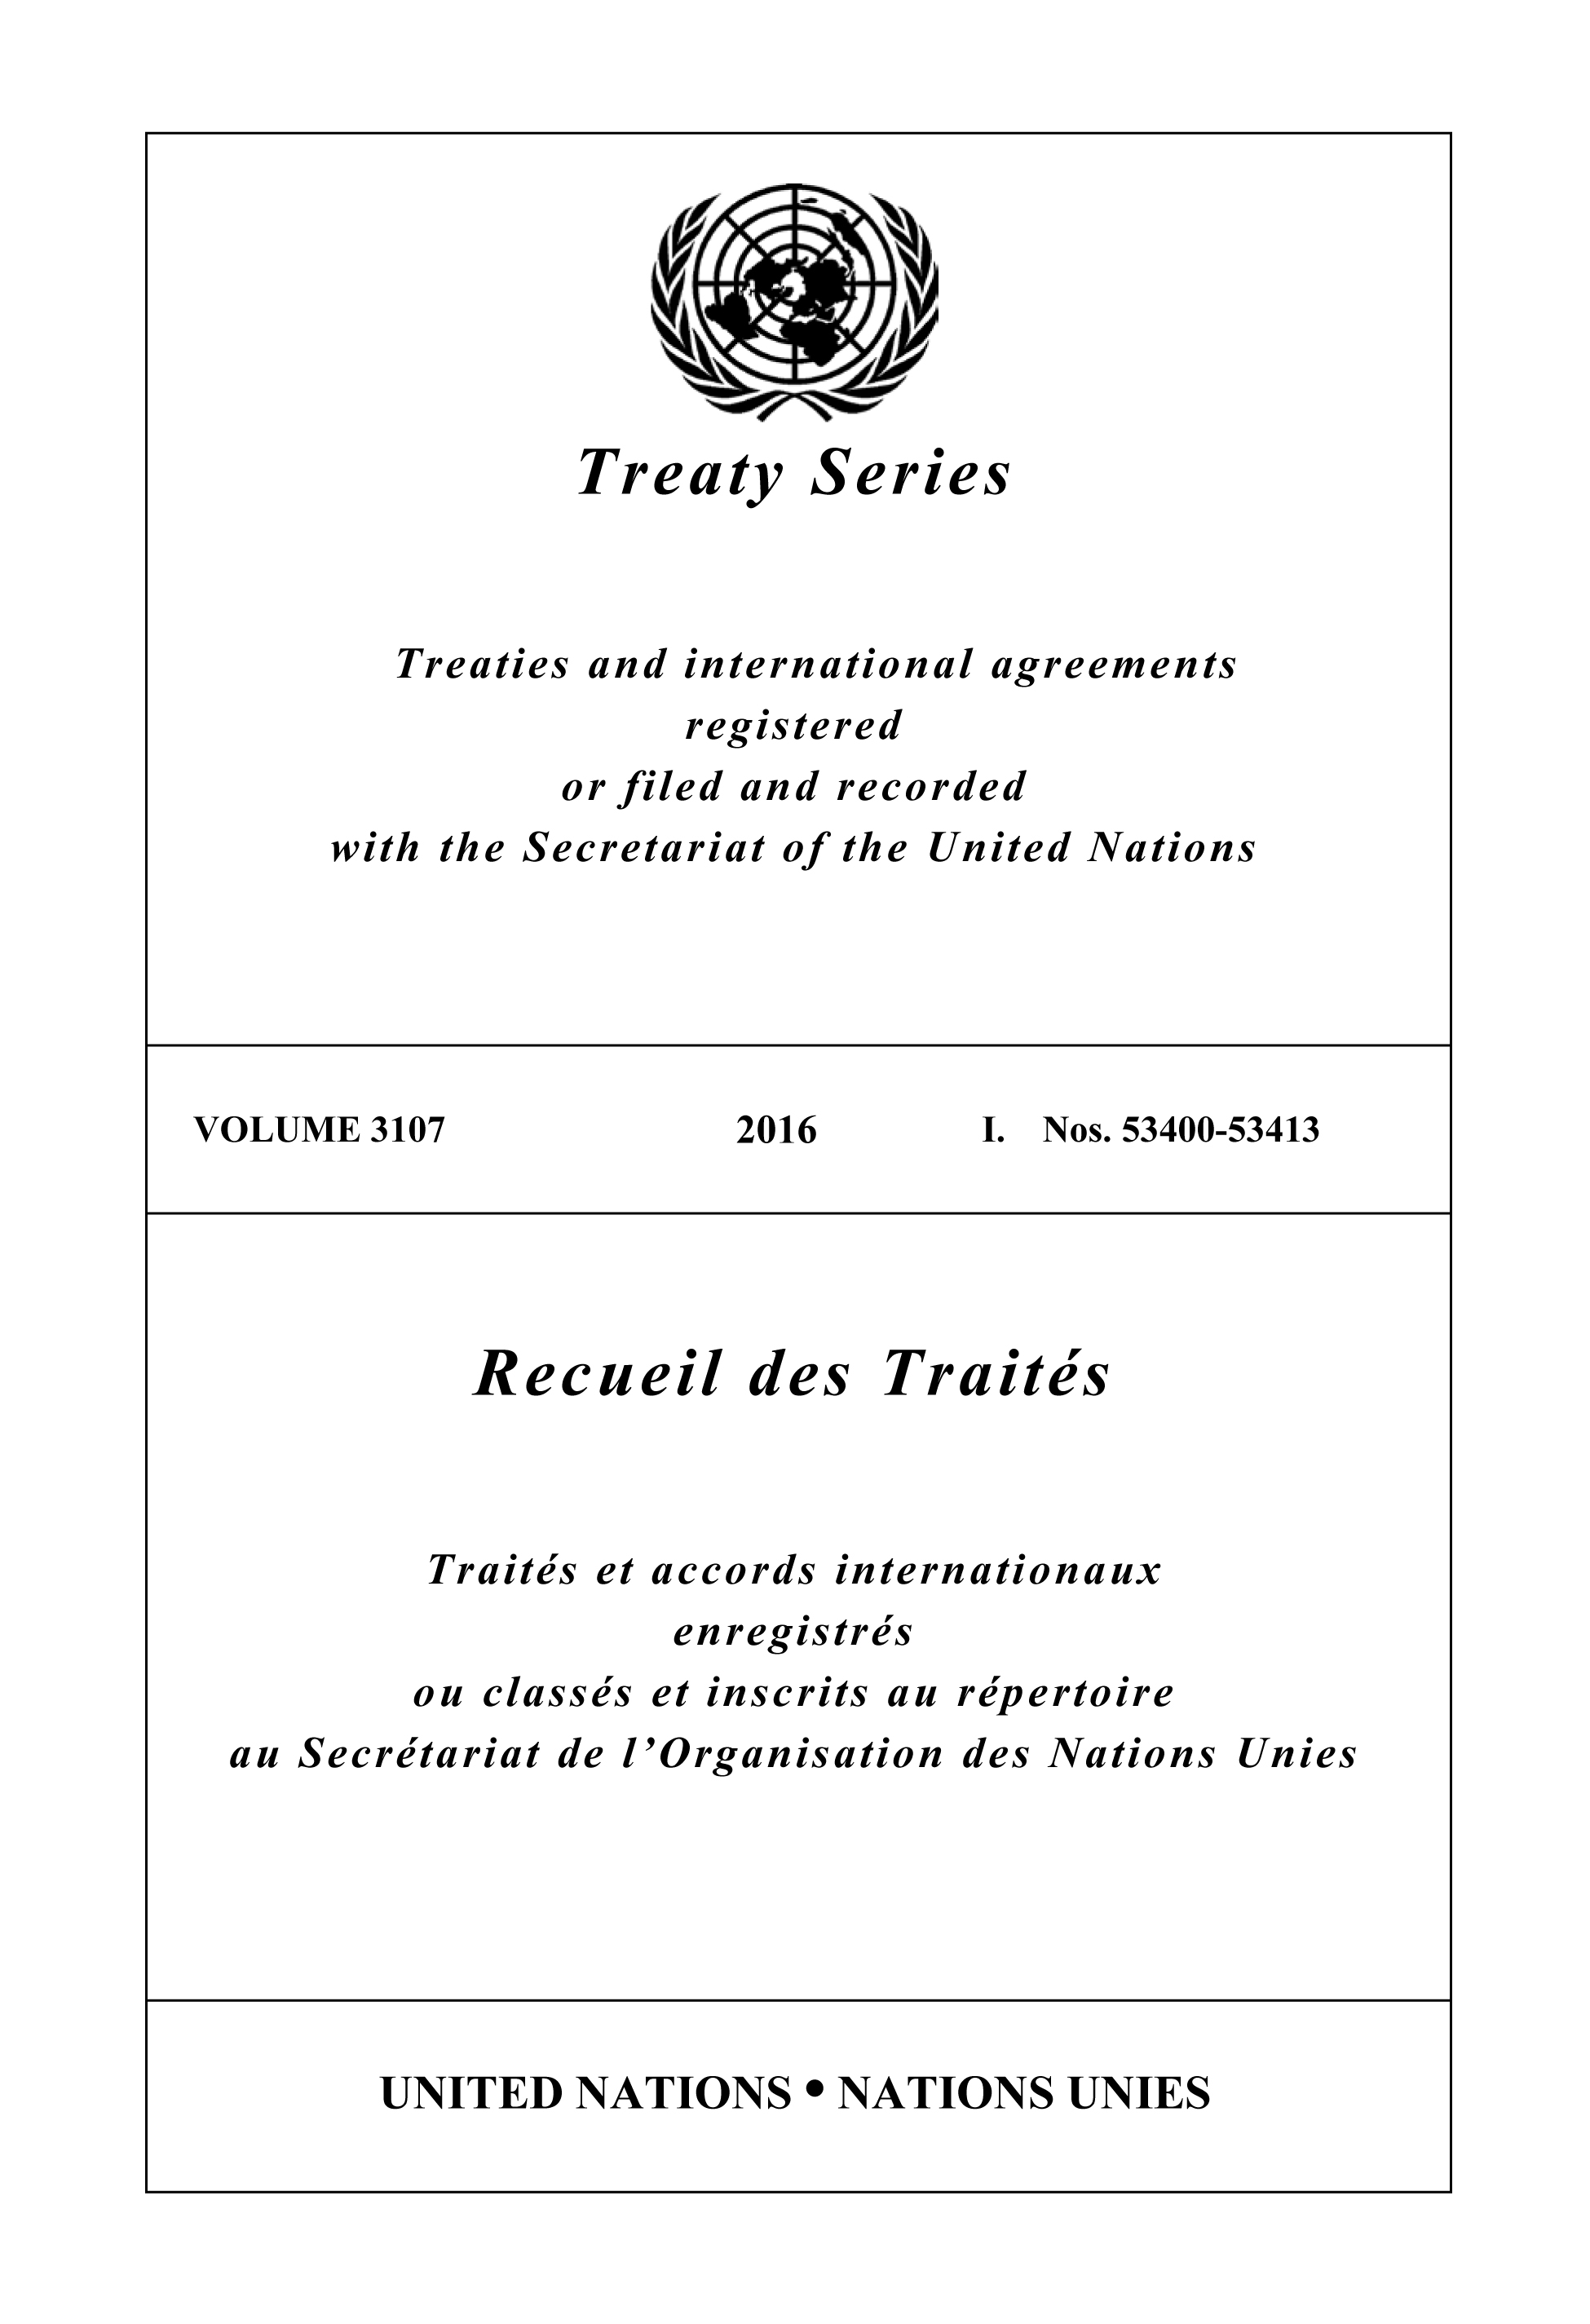 image of Treaty Series 3107